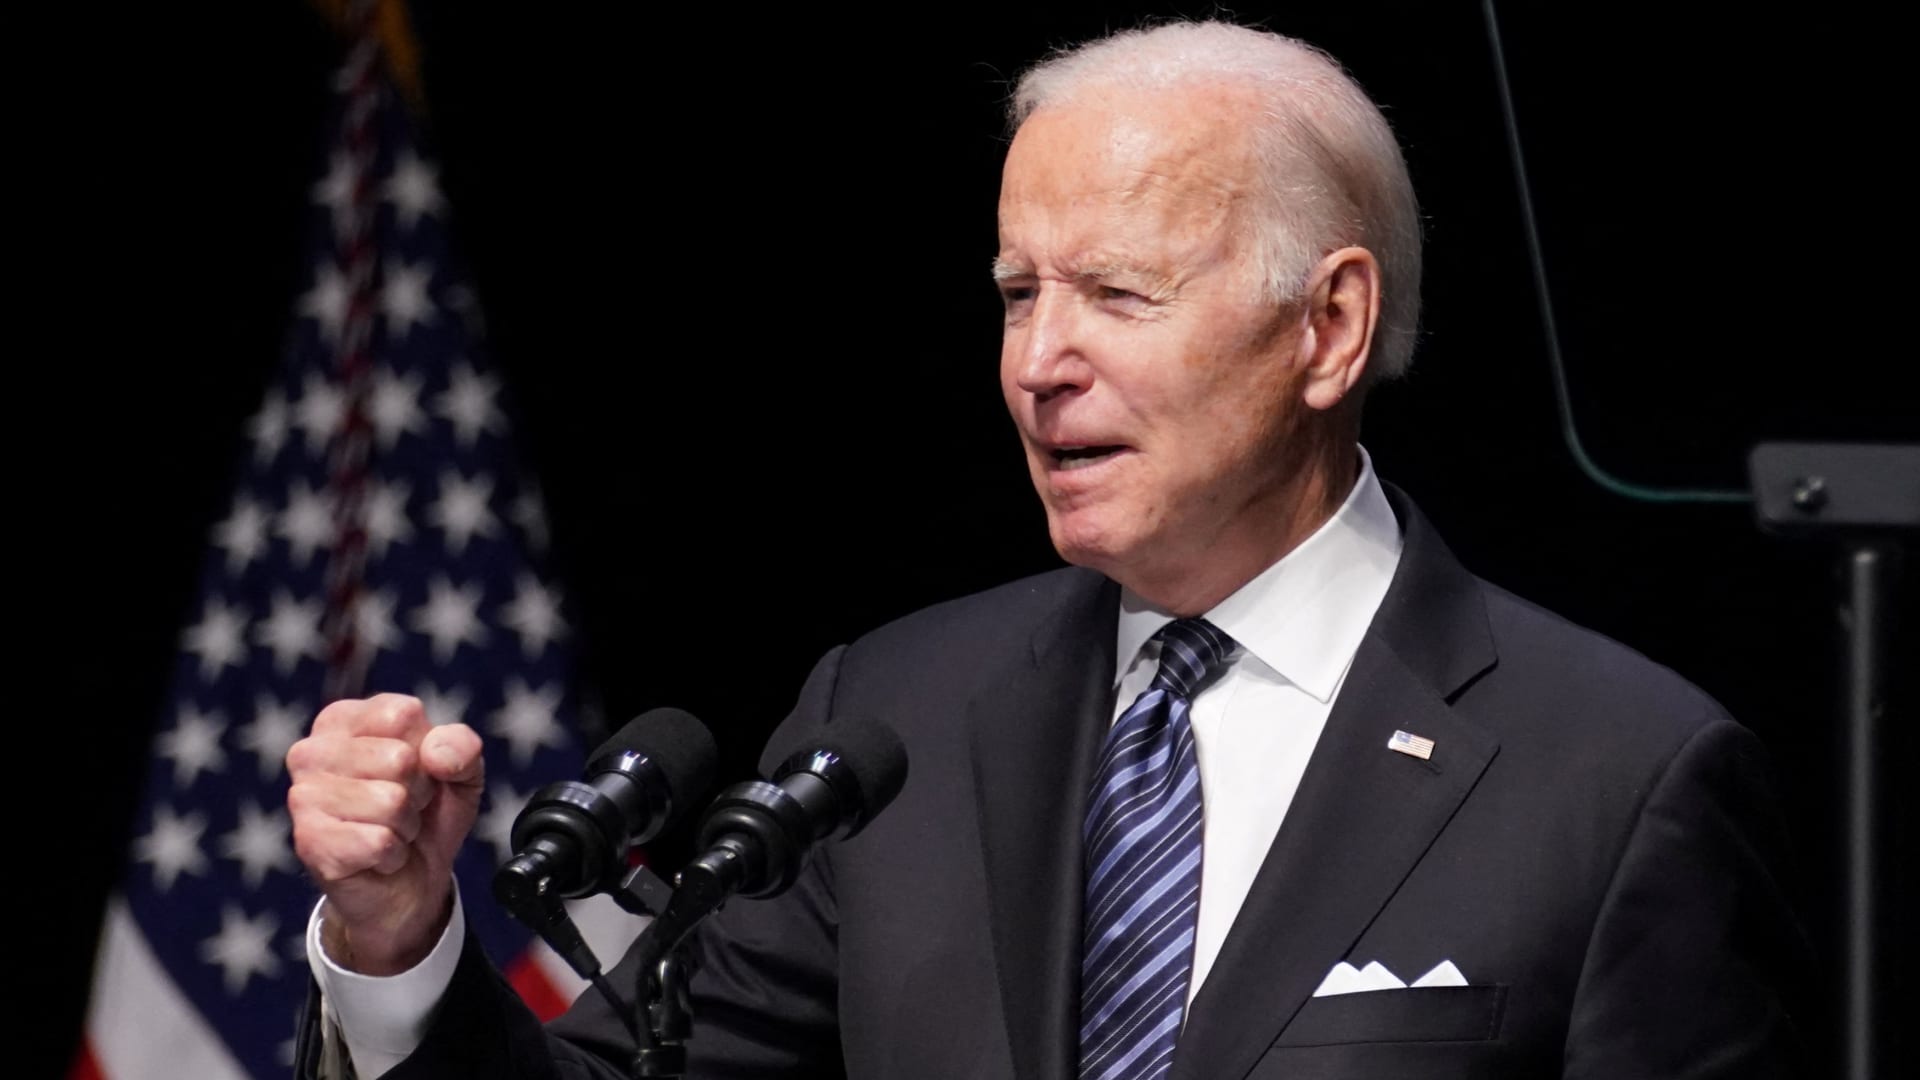 Biden defends abortion rights after Supreme Court draft on Roe v. Wade